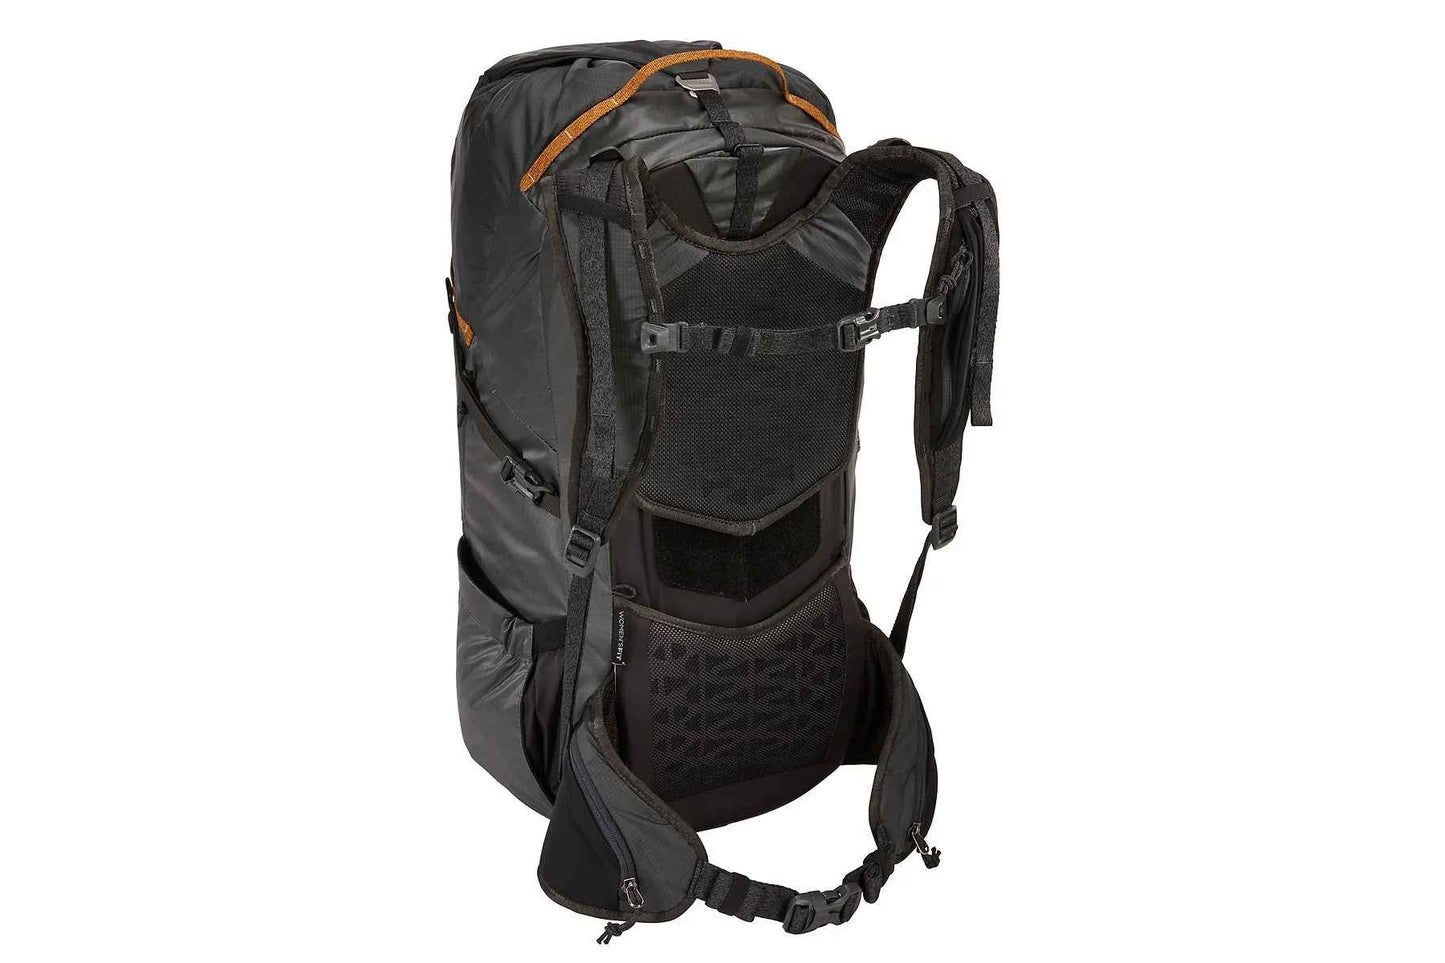 Women's hiking backpack Thule 35L Stir Obsidian